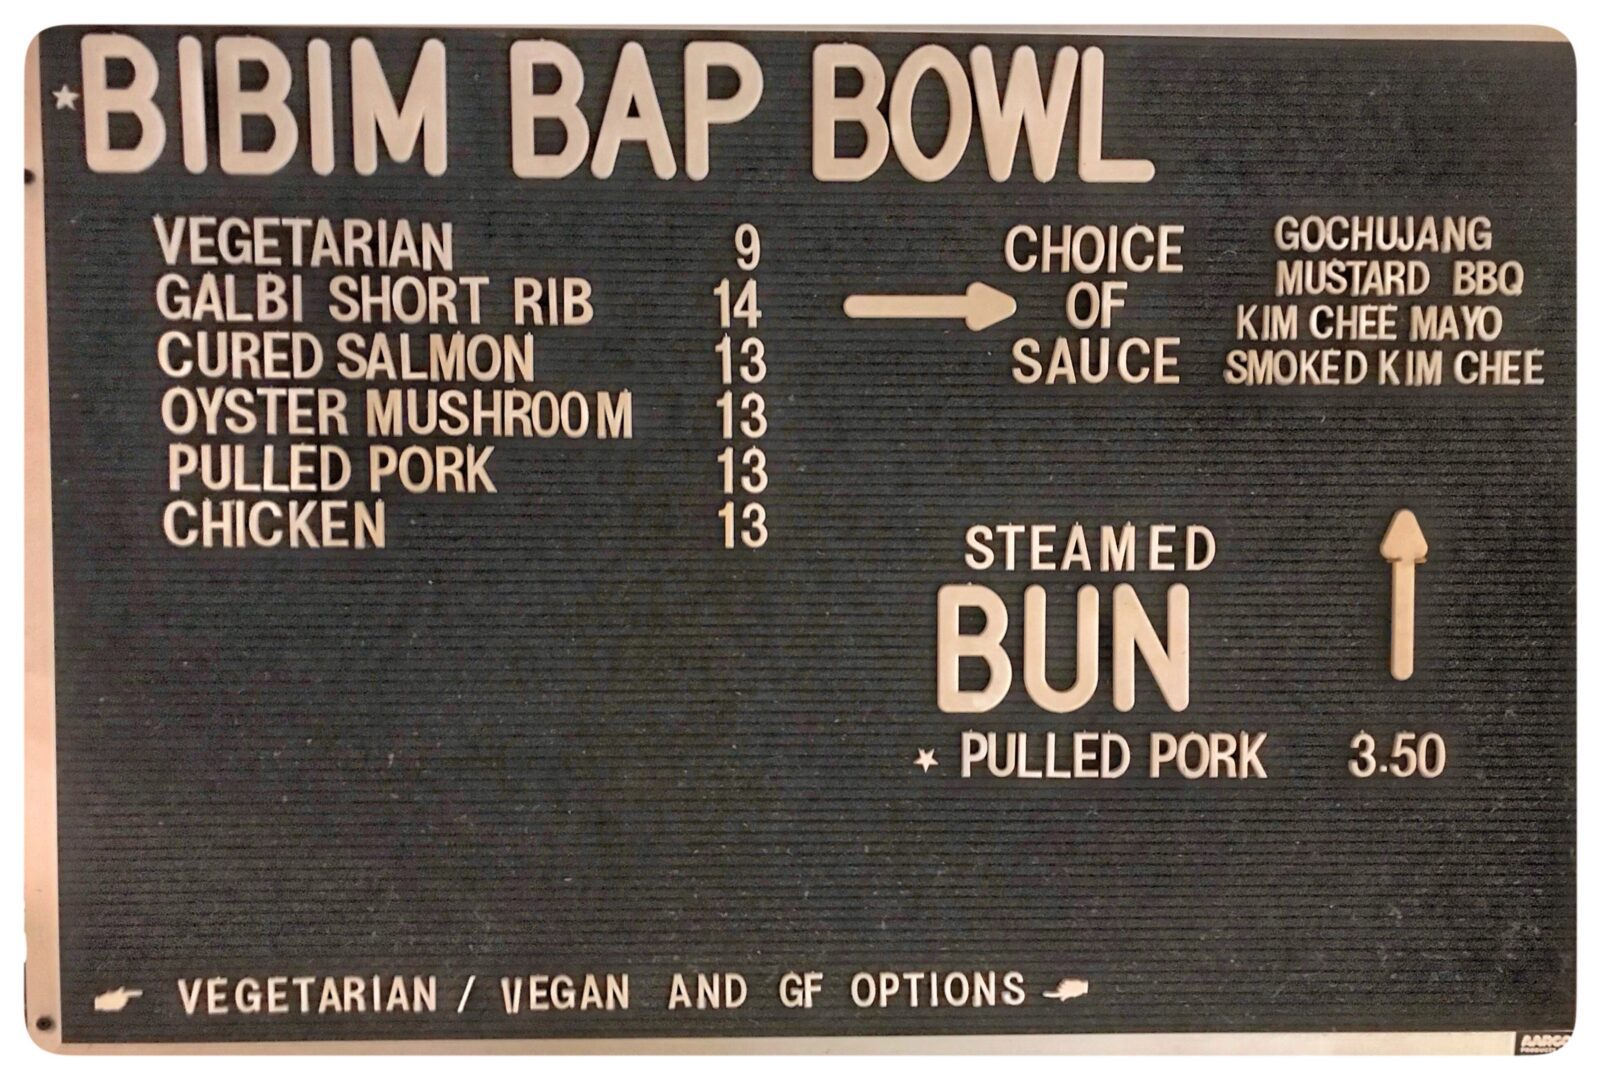 A sign for the bim bap bowl.